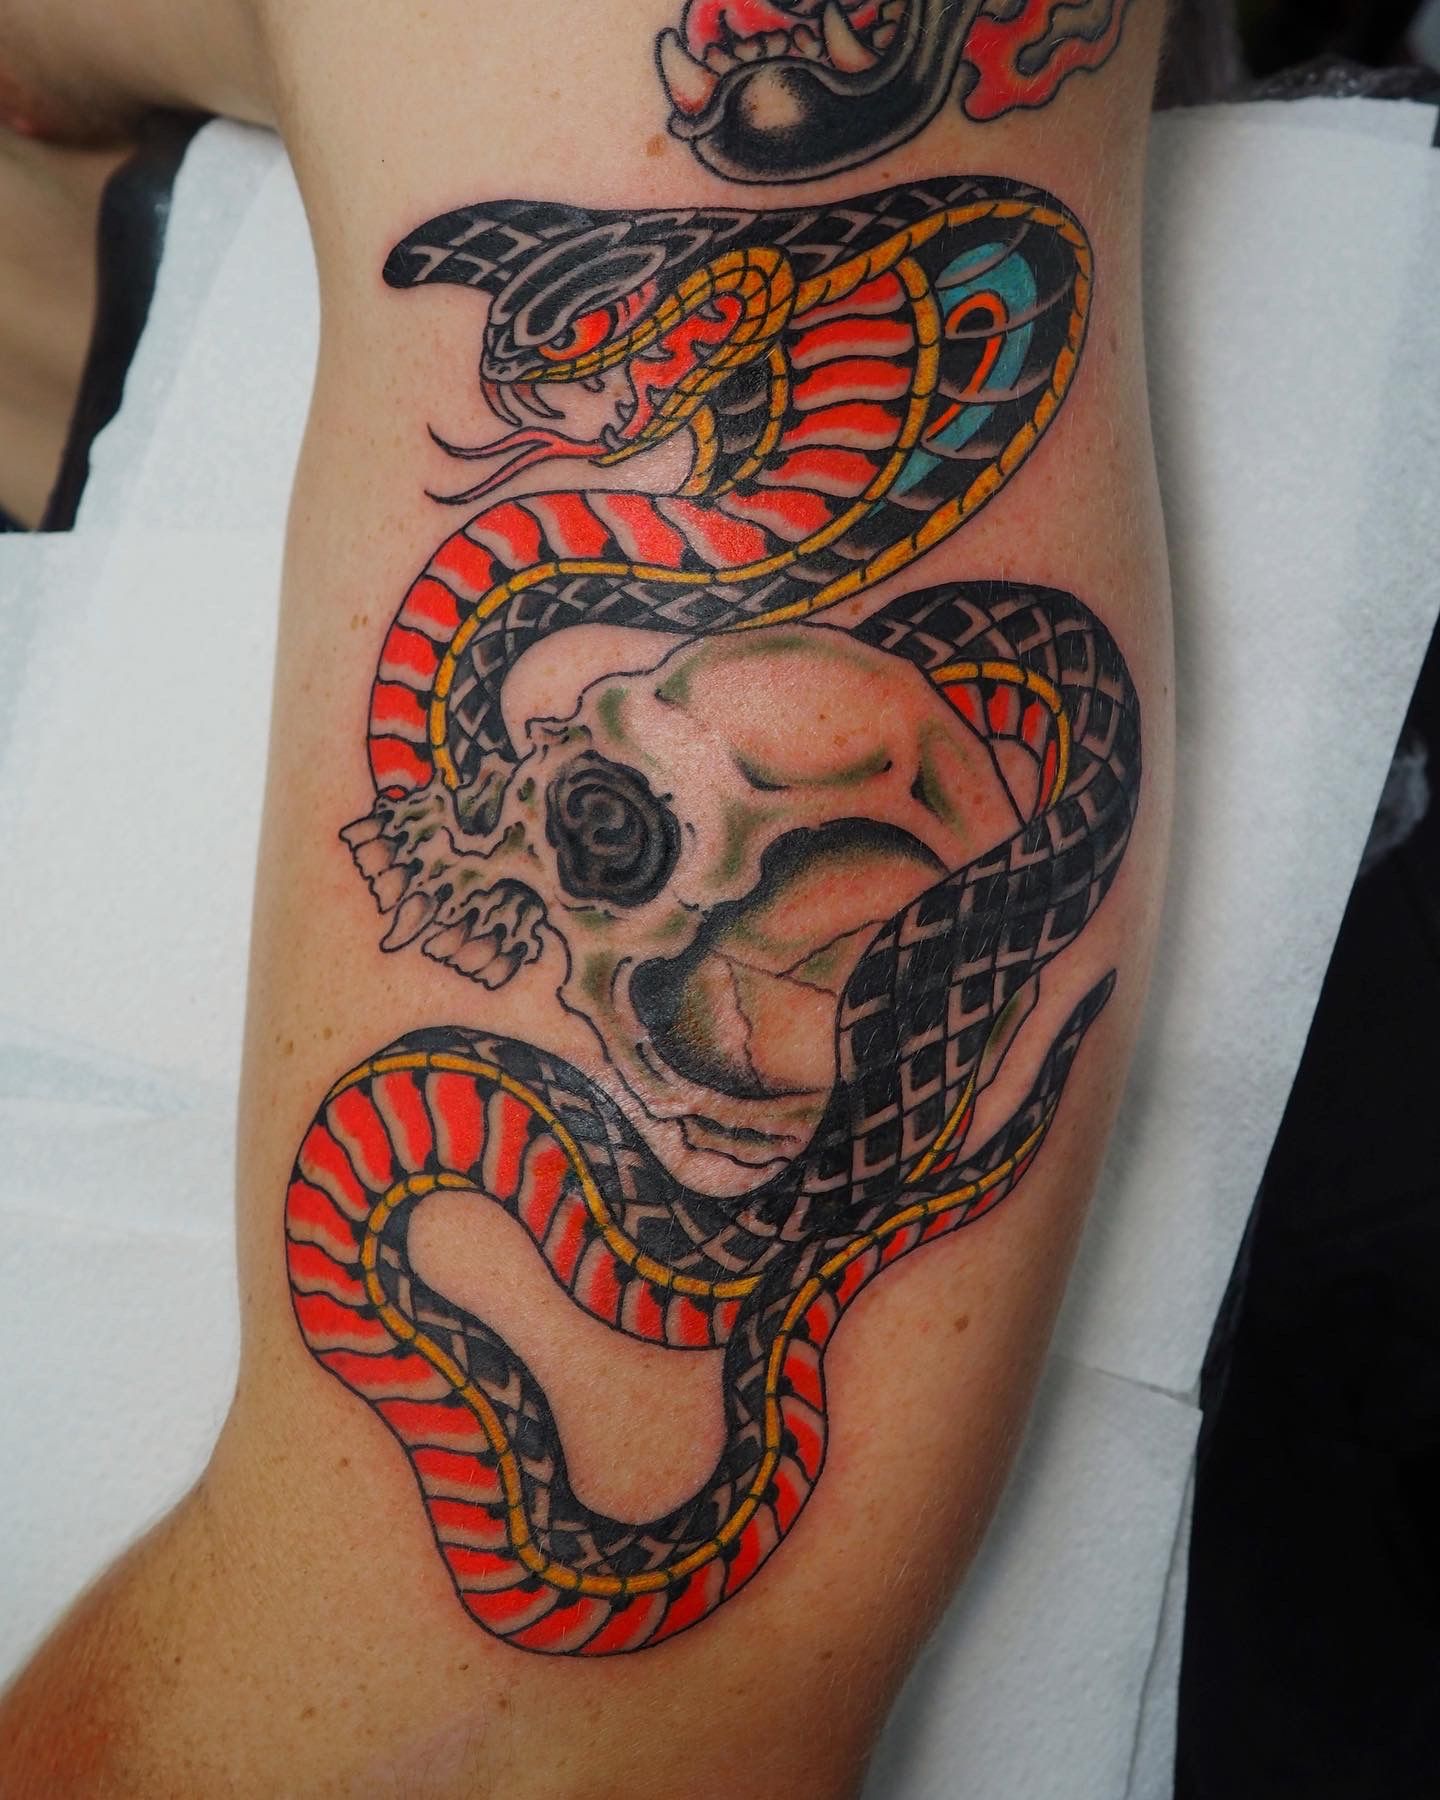 Cobrasnake Tattoo by @johancorteztattoo - Tattoogrid.net